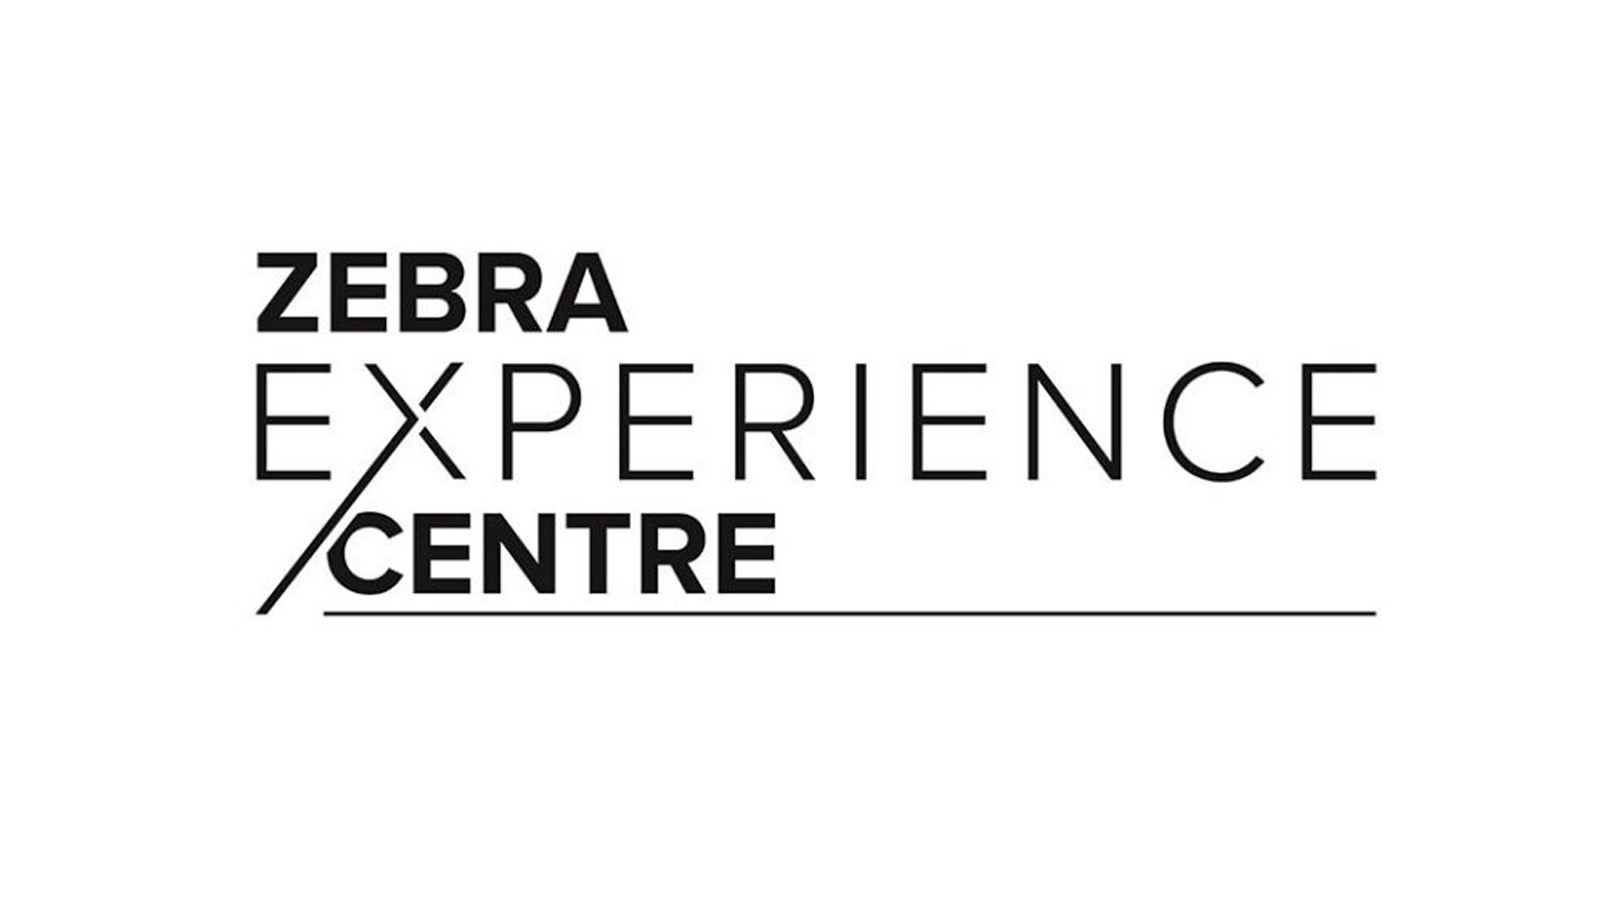 Zebra Experience Centre in Bourne End, United Kingdom